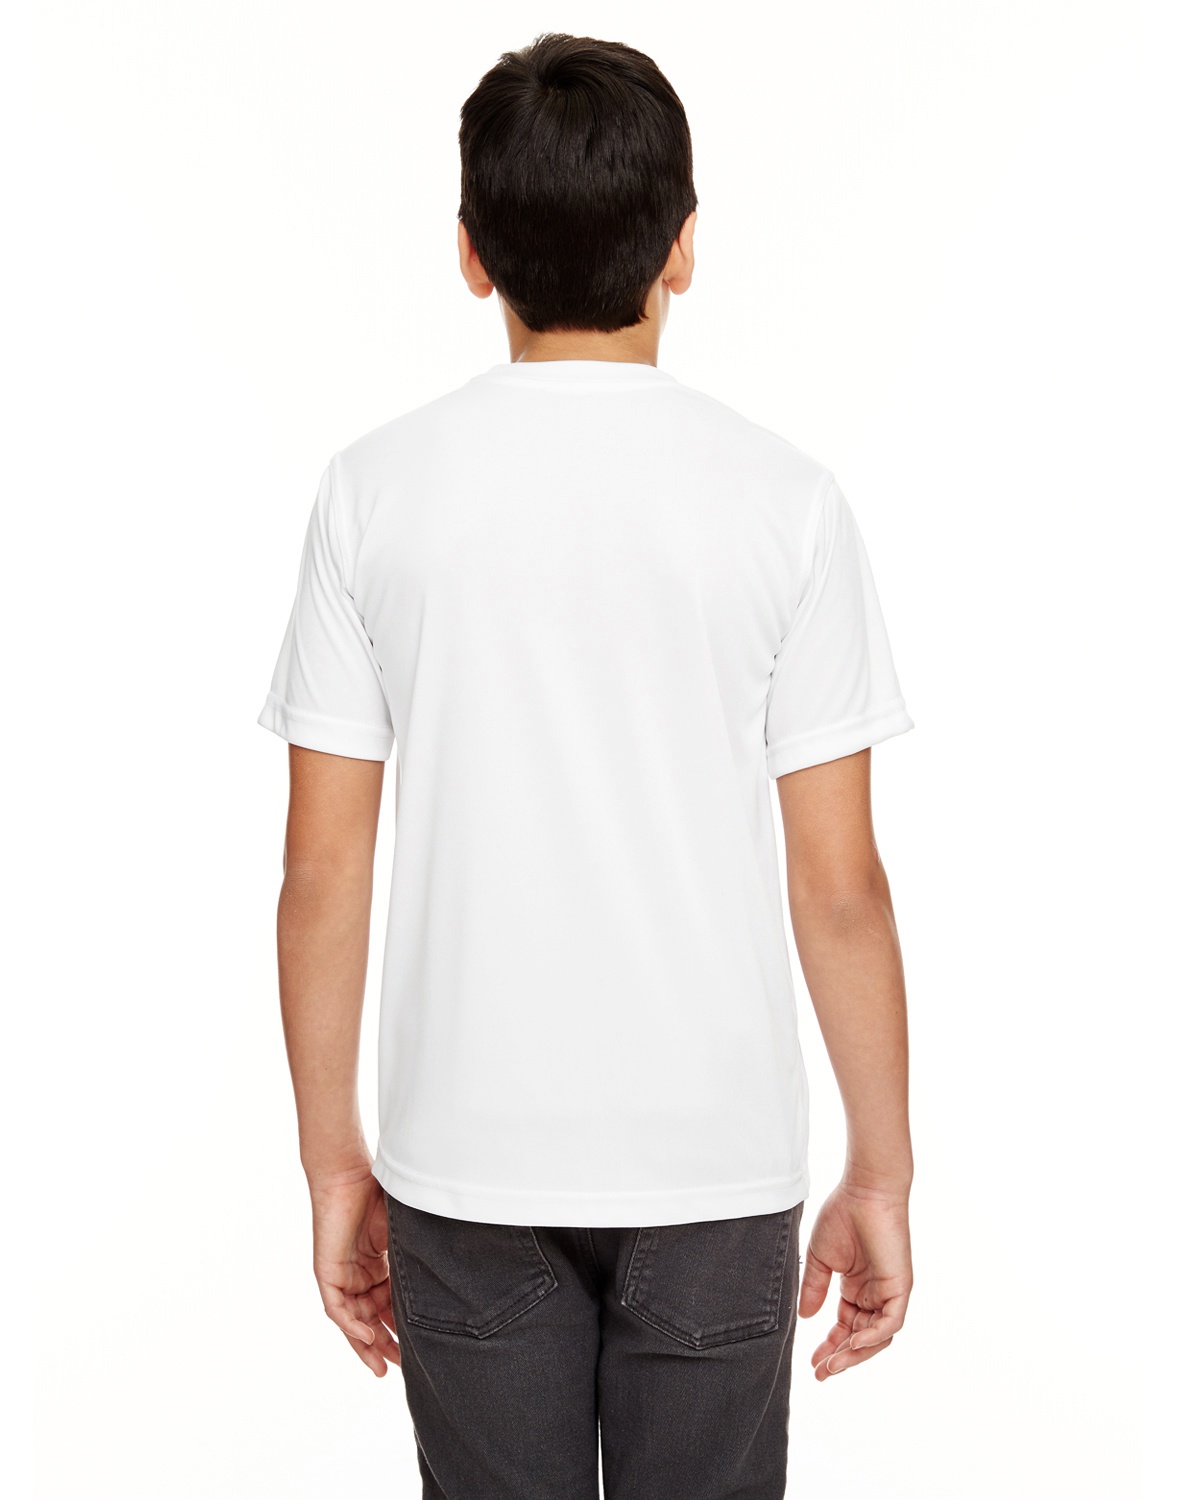 'UltraClub 8620Y Youth Cool & Dry Basic Performance T-Shirt'